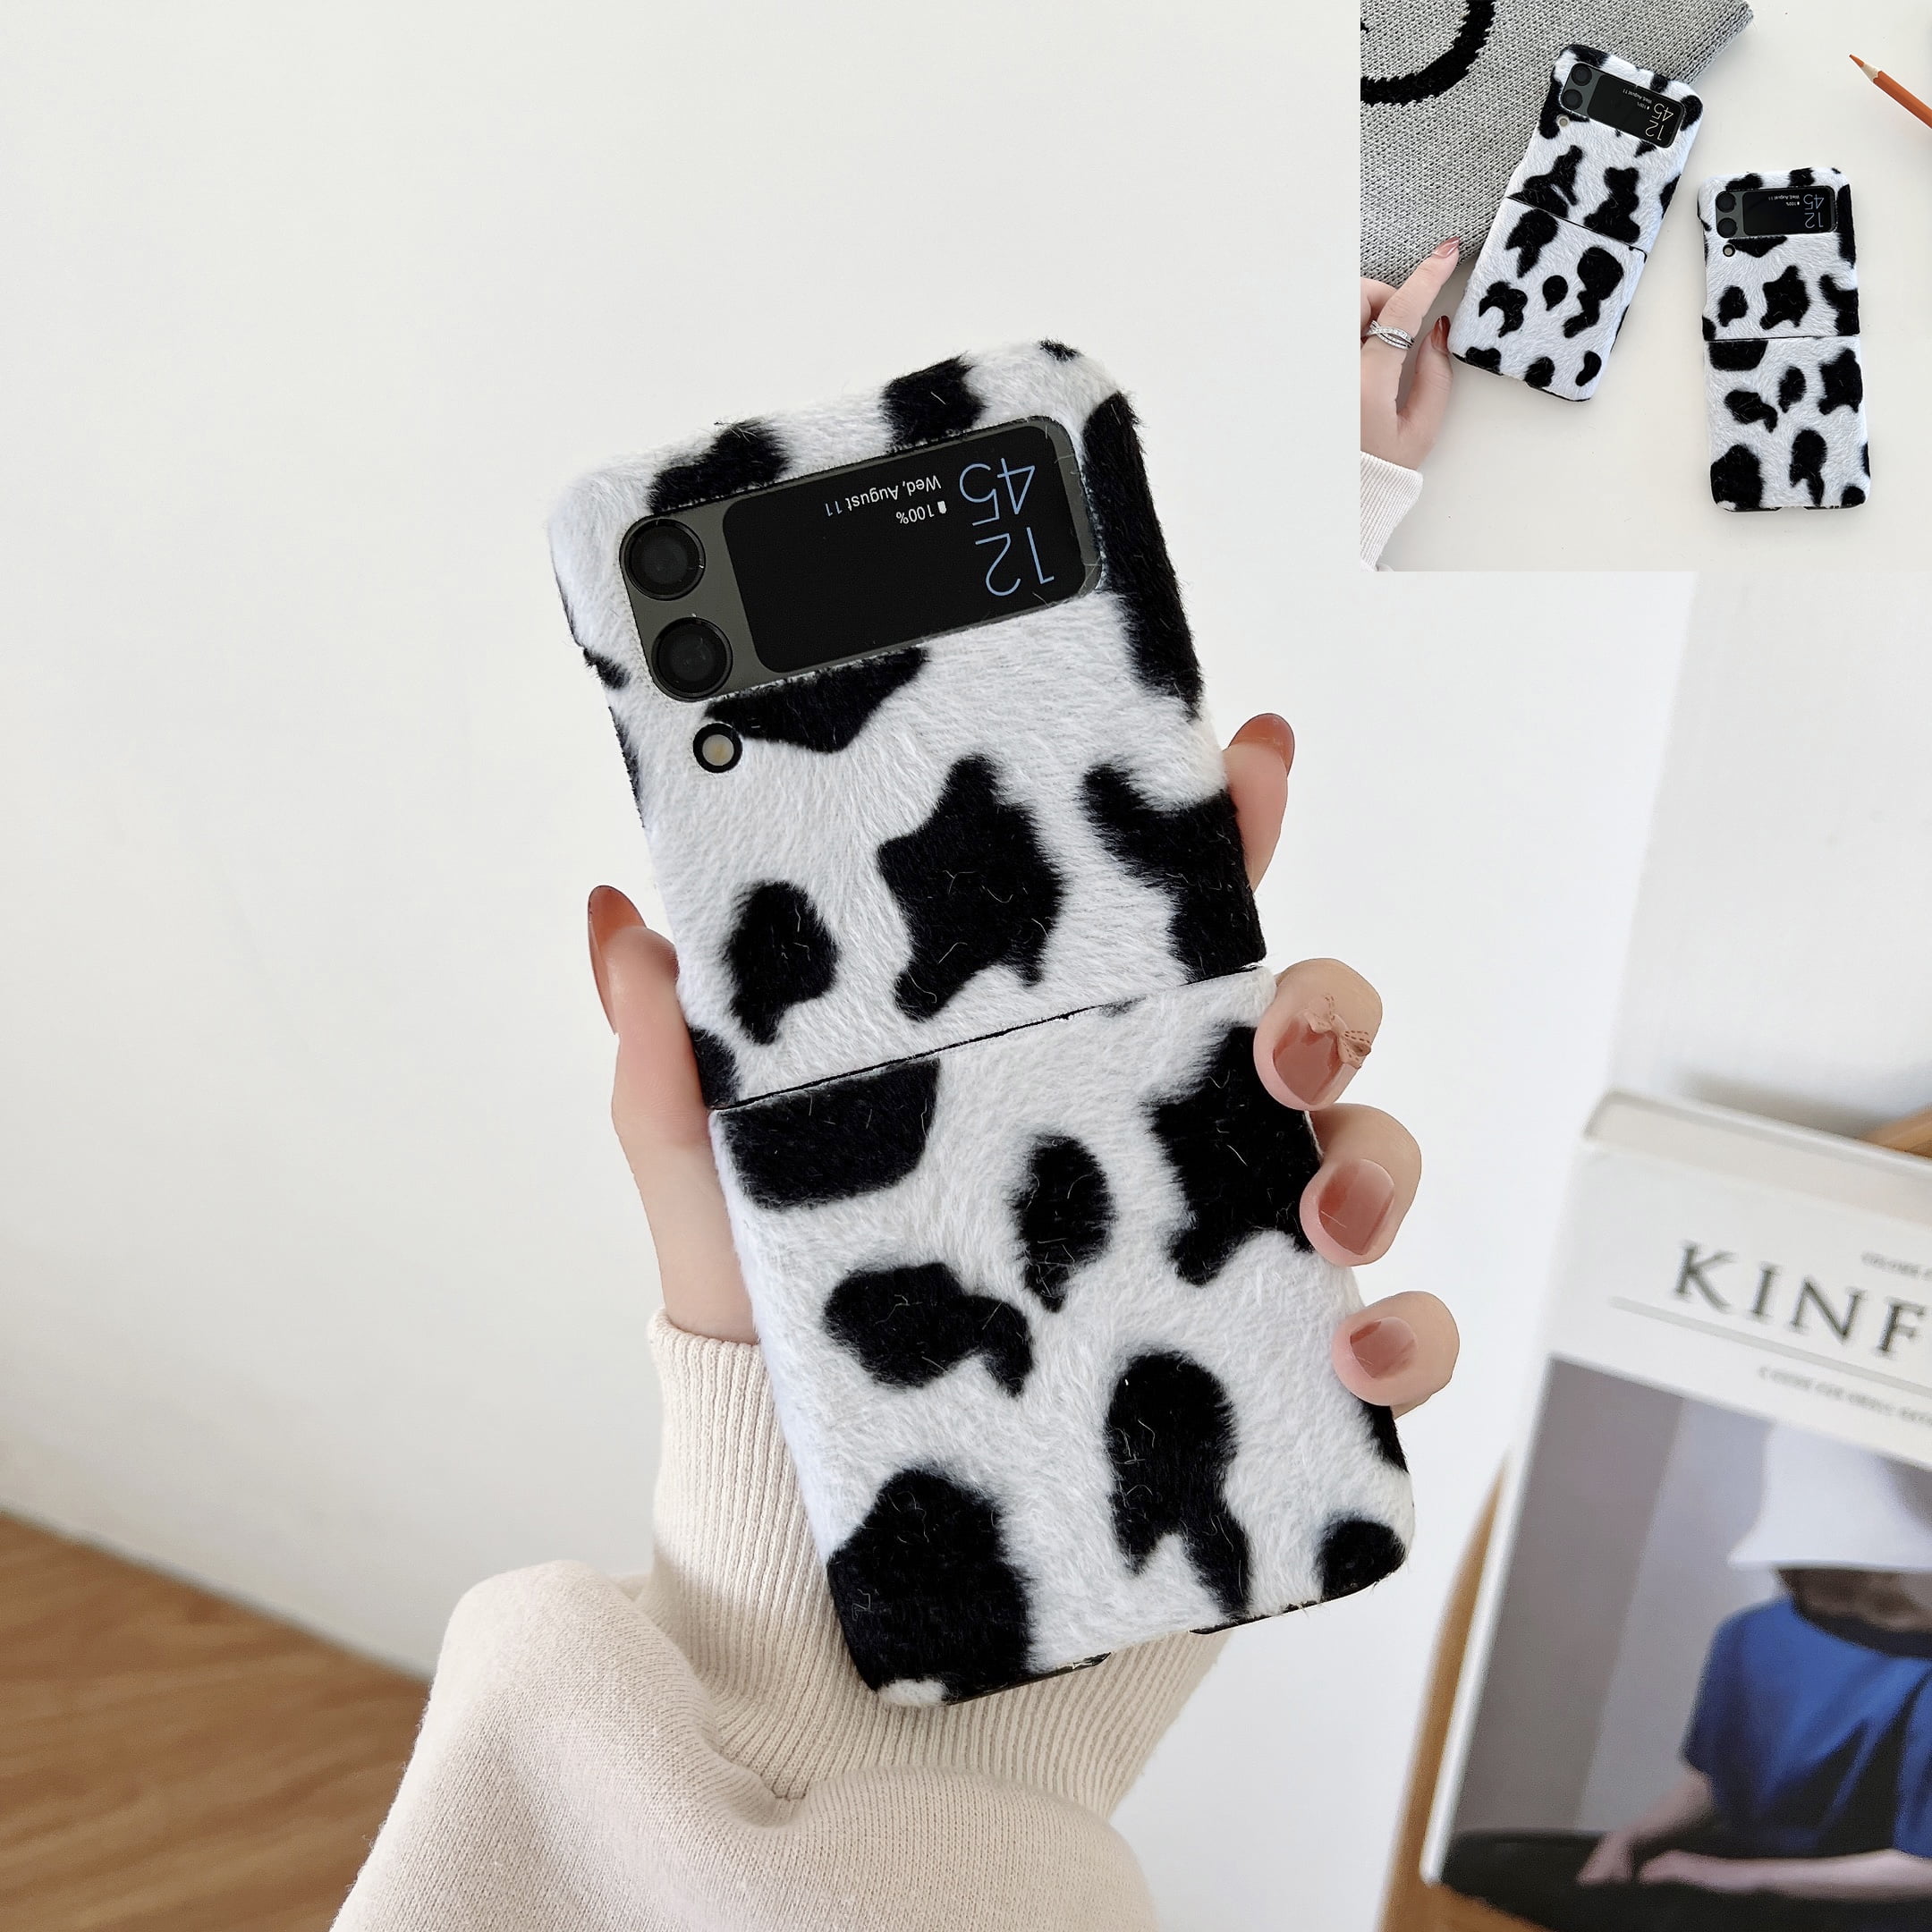 wowacase Cute Flower Smile Phone Case for Samsung Galaxy Z Flip 3 5G (Color: White)